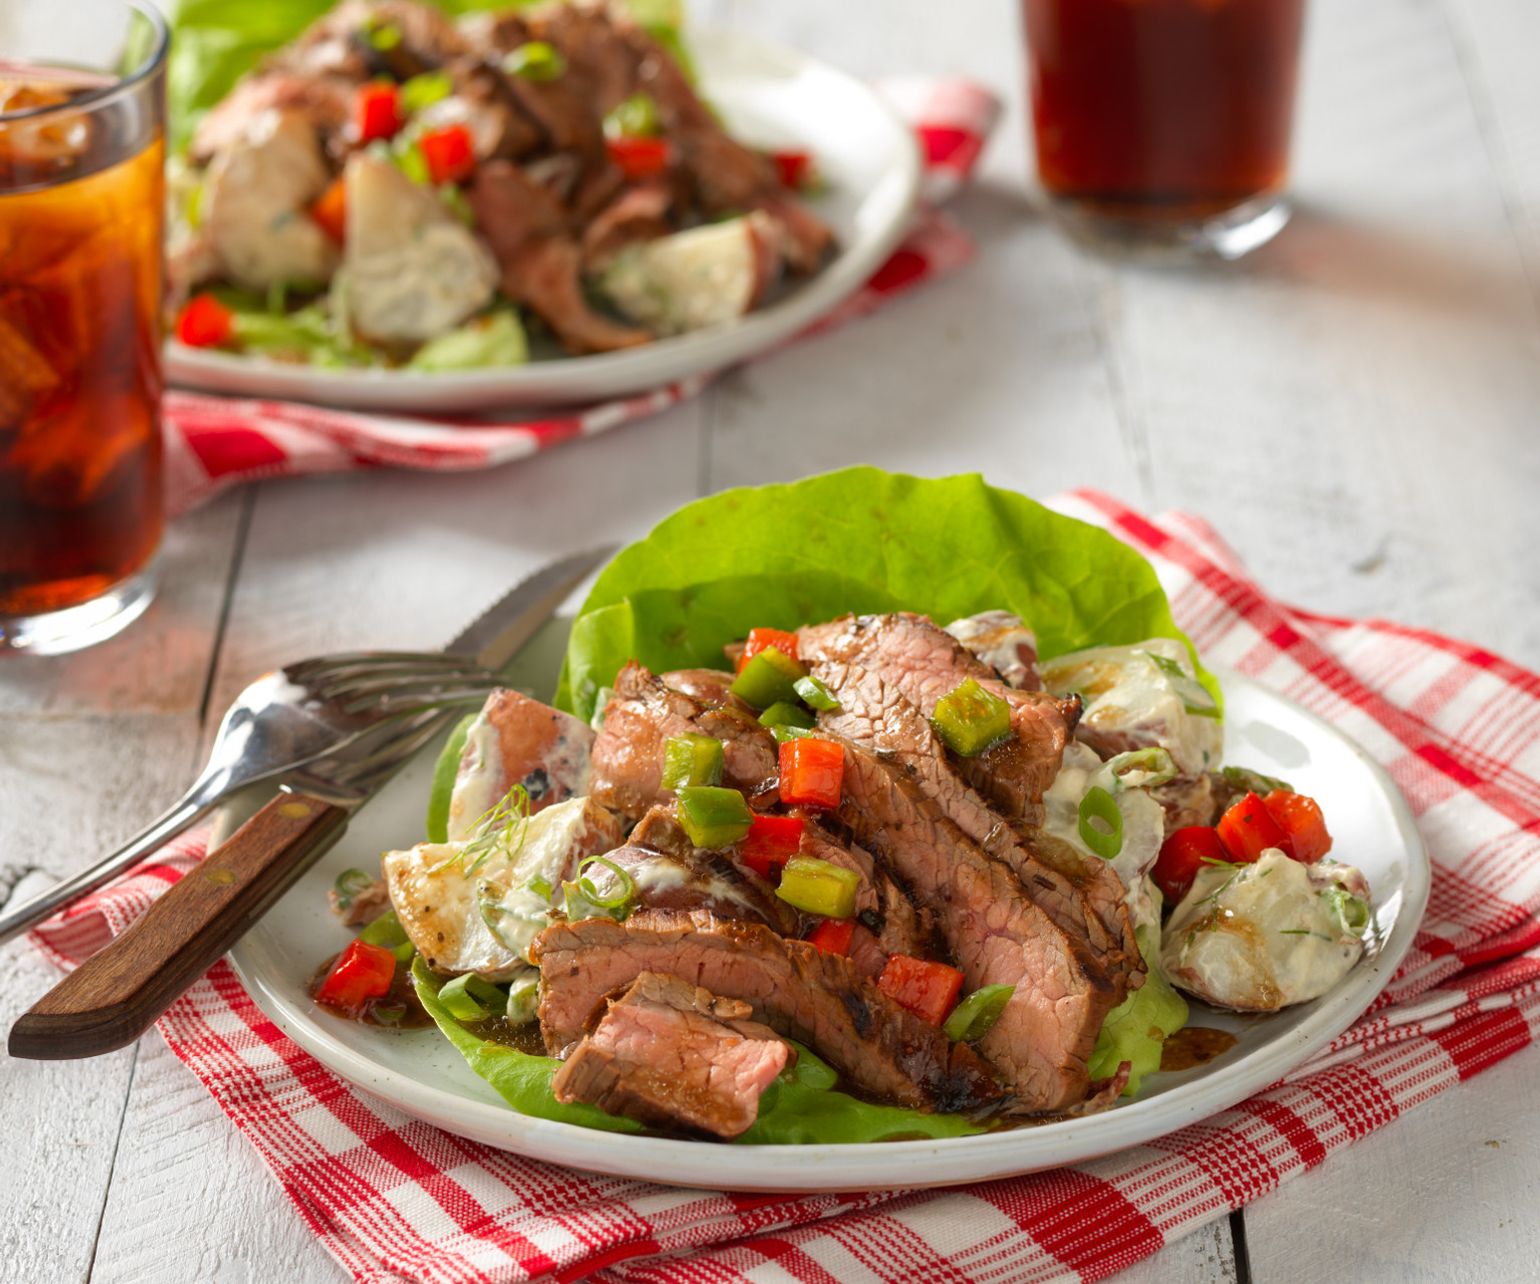 Grilled Flank Steak and Potato Salad